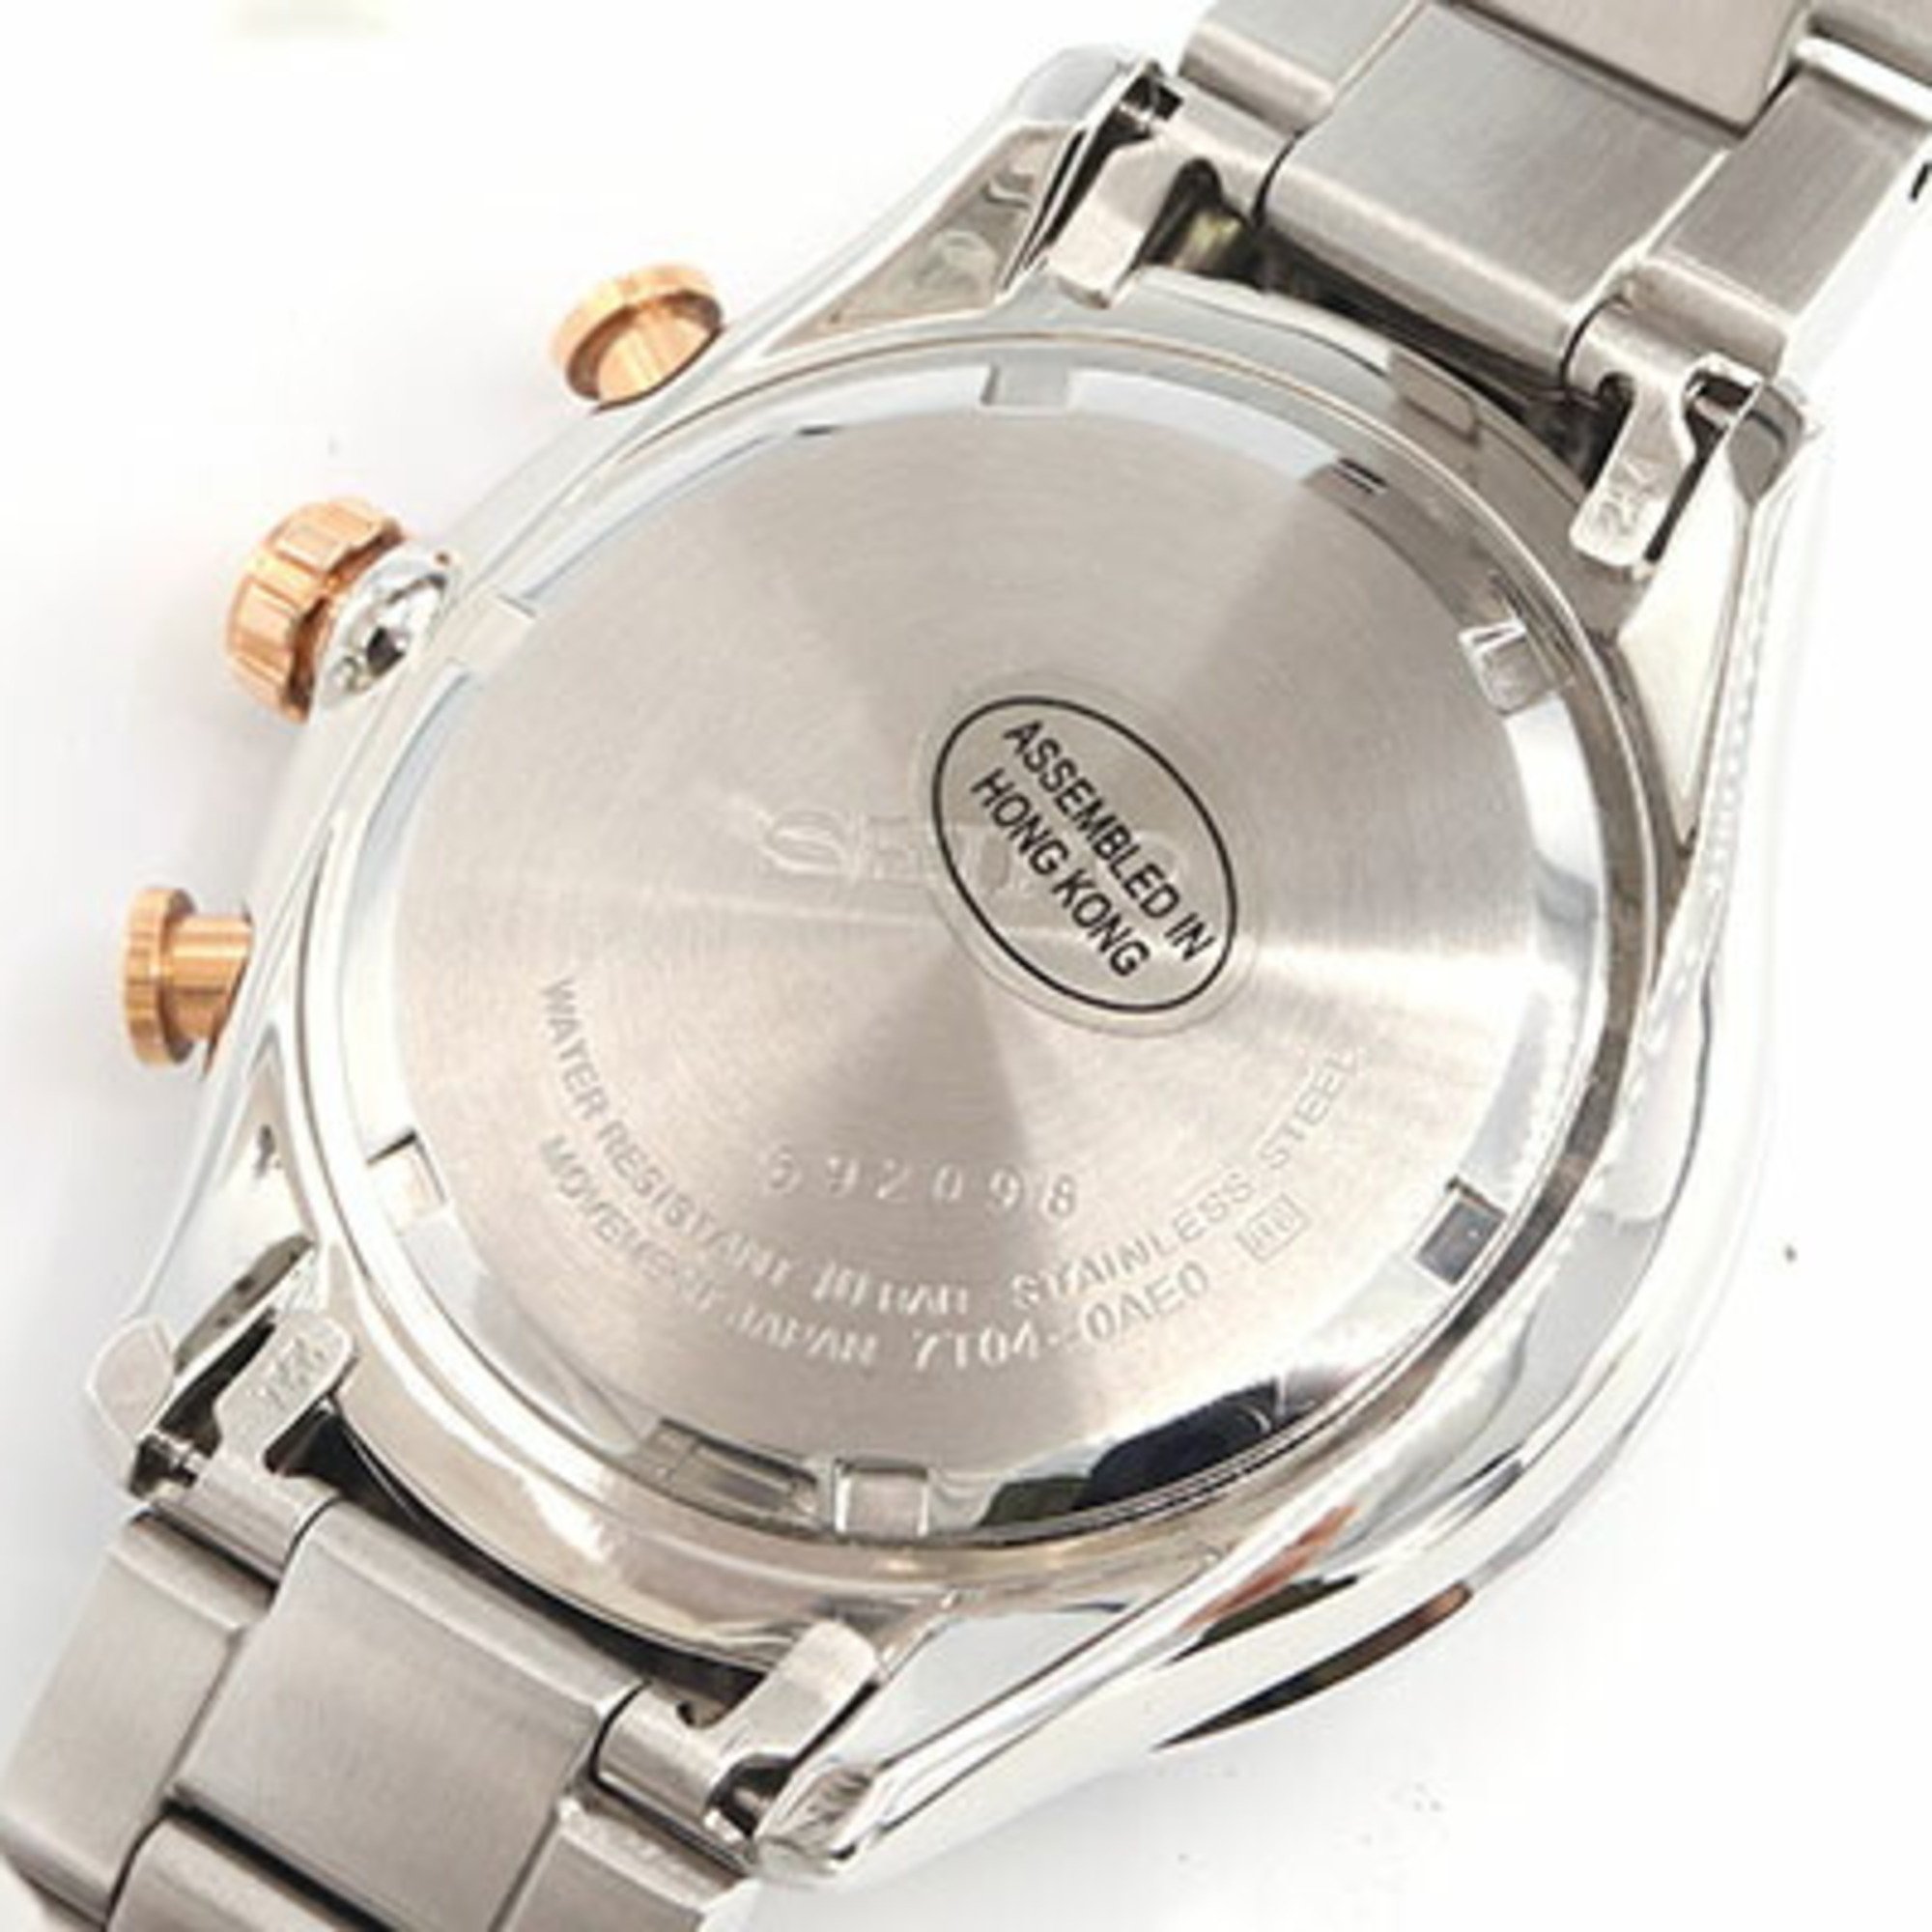 SEIKO men's watch overseas model big date chronograph SPC151P1 dark gray dial bar index stainless steel quartz wristwatch business calendar